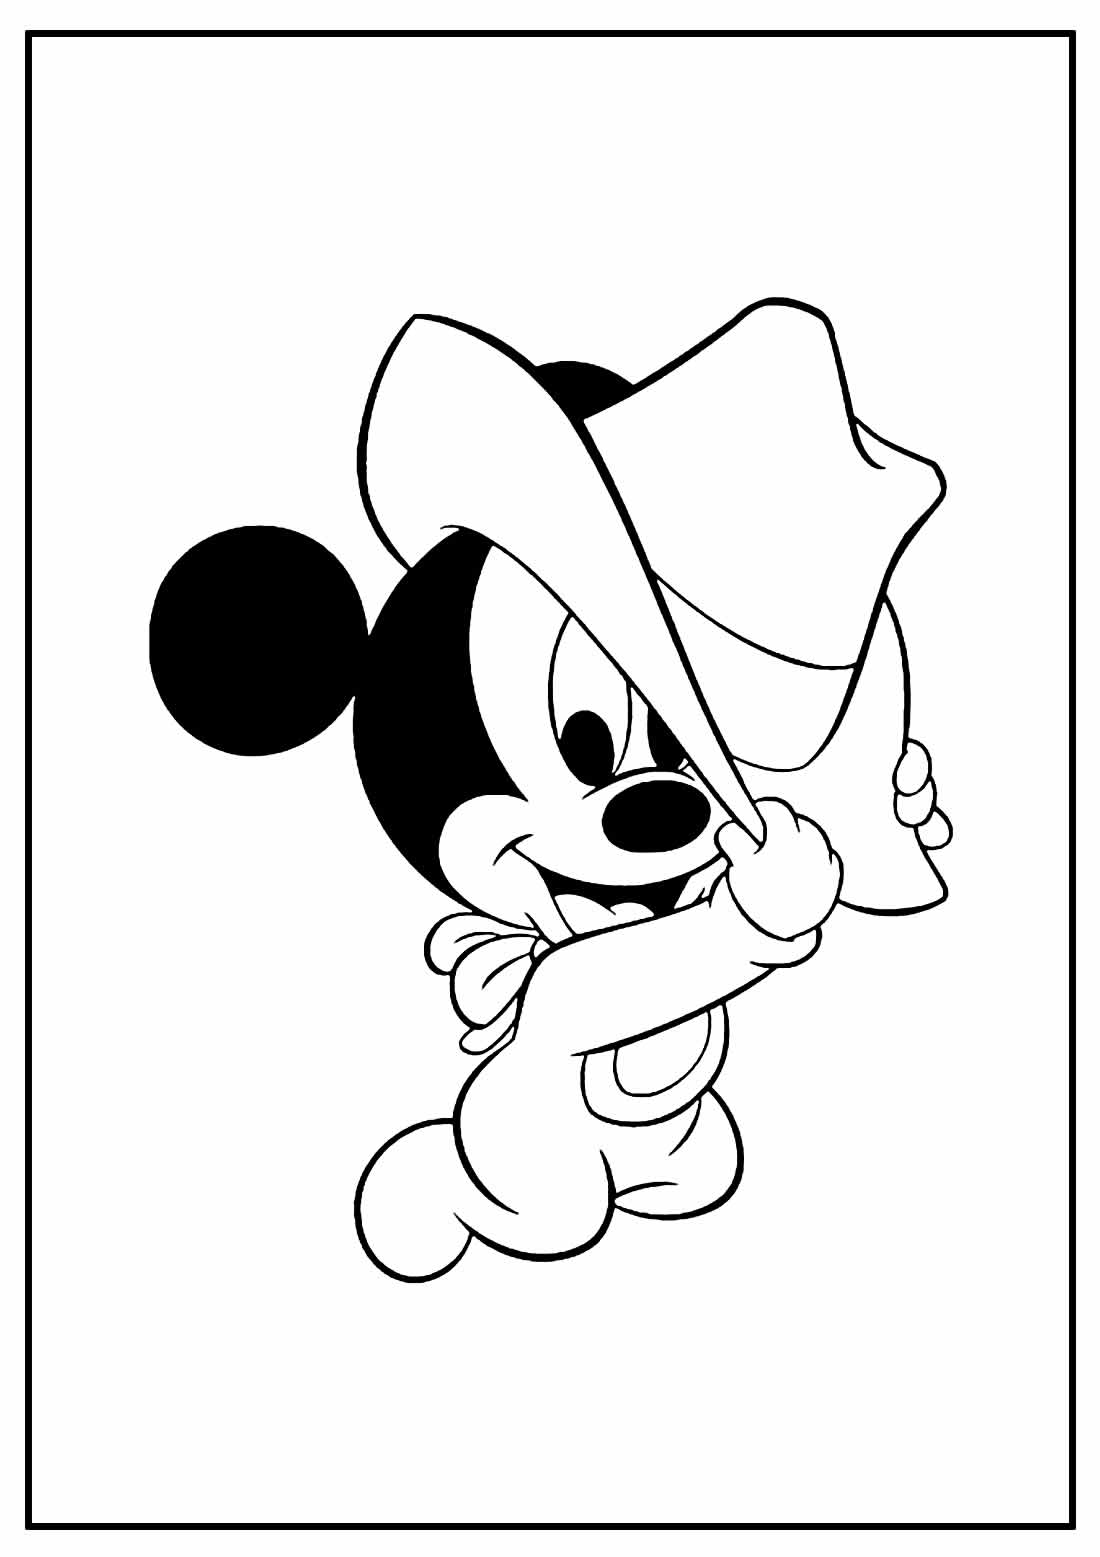 Página para colorir do Mickey Mouse bebê